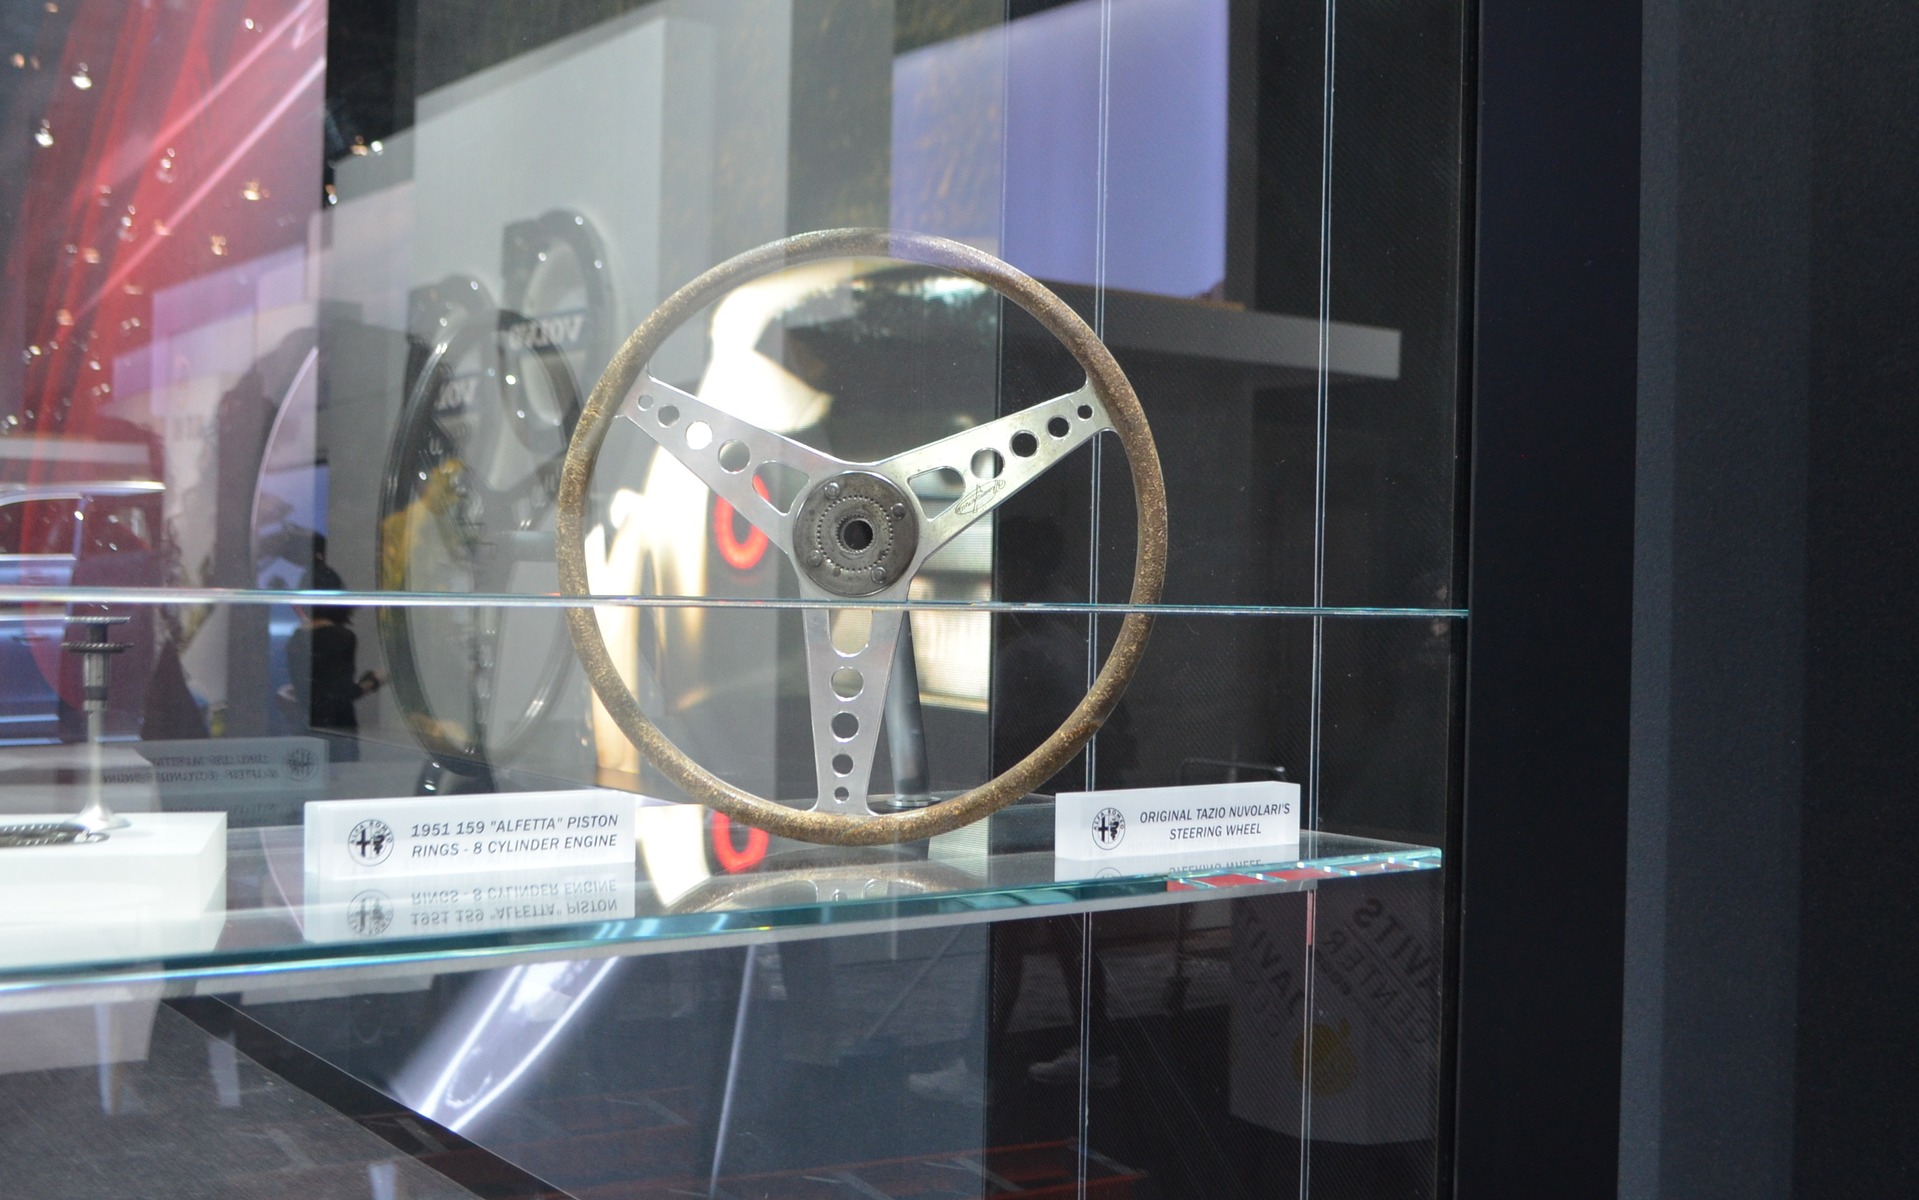 And here is Tazio Nuvolari's steering wheel.